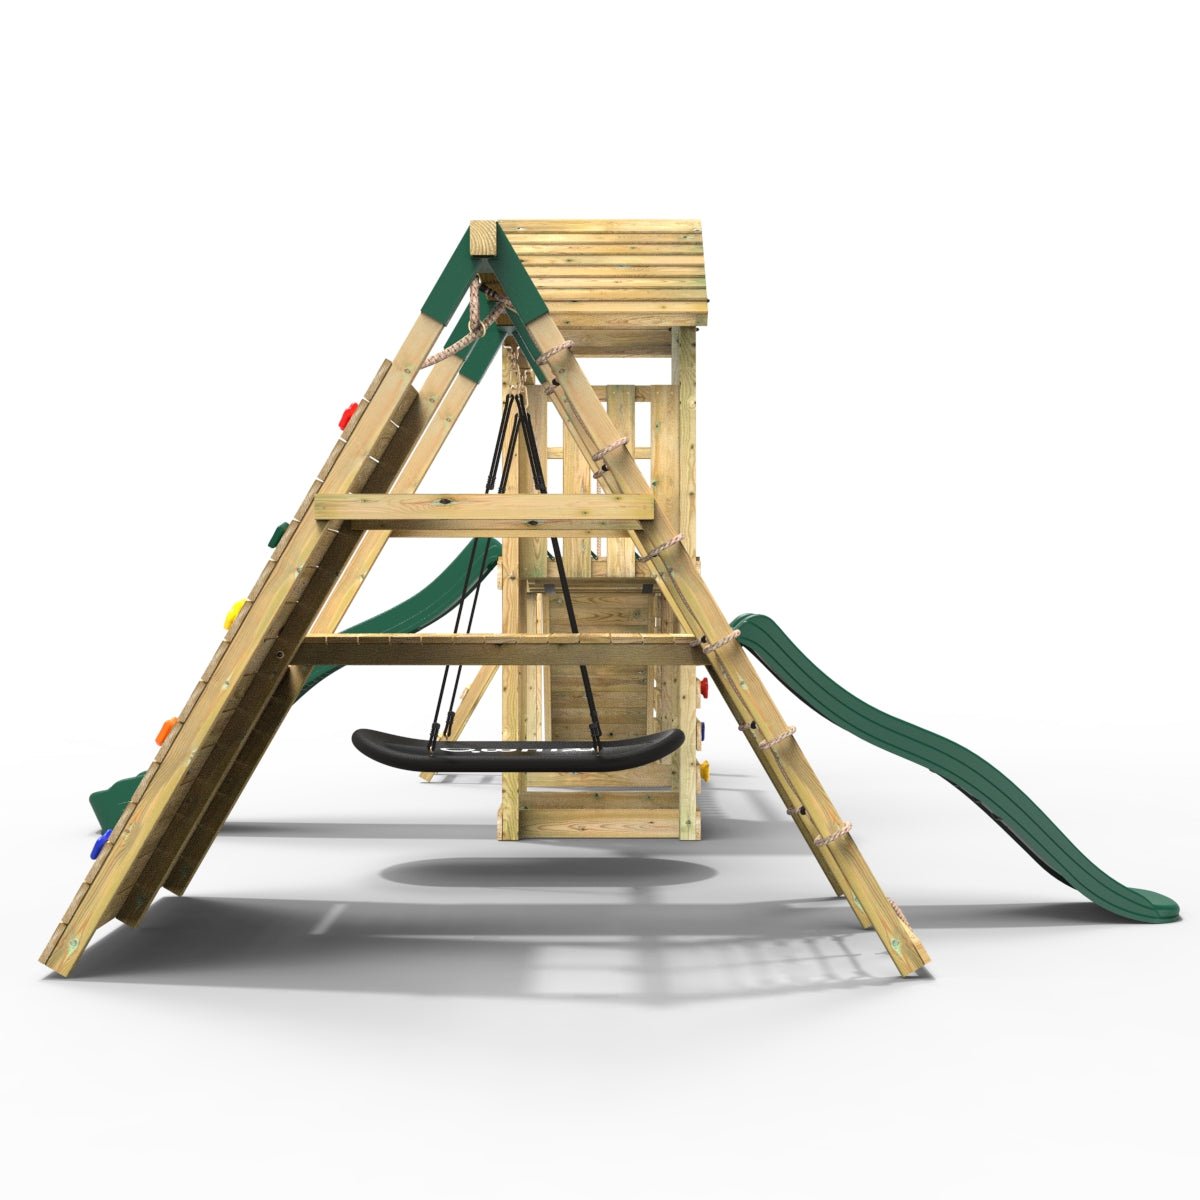 Rebo Double Tower Climbing Frame with Flexible Bridge, Swing & Slide - Crestone